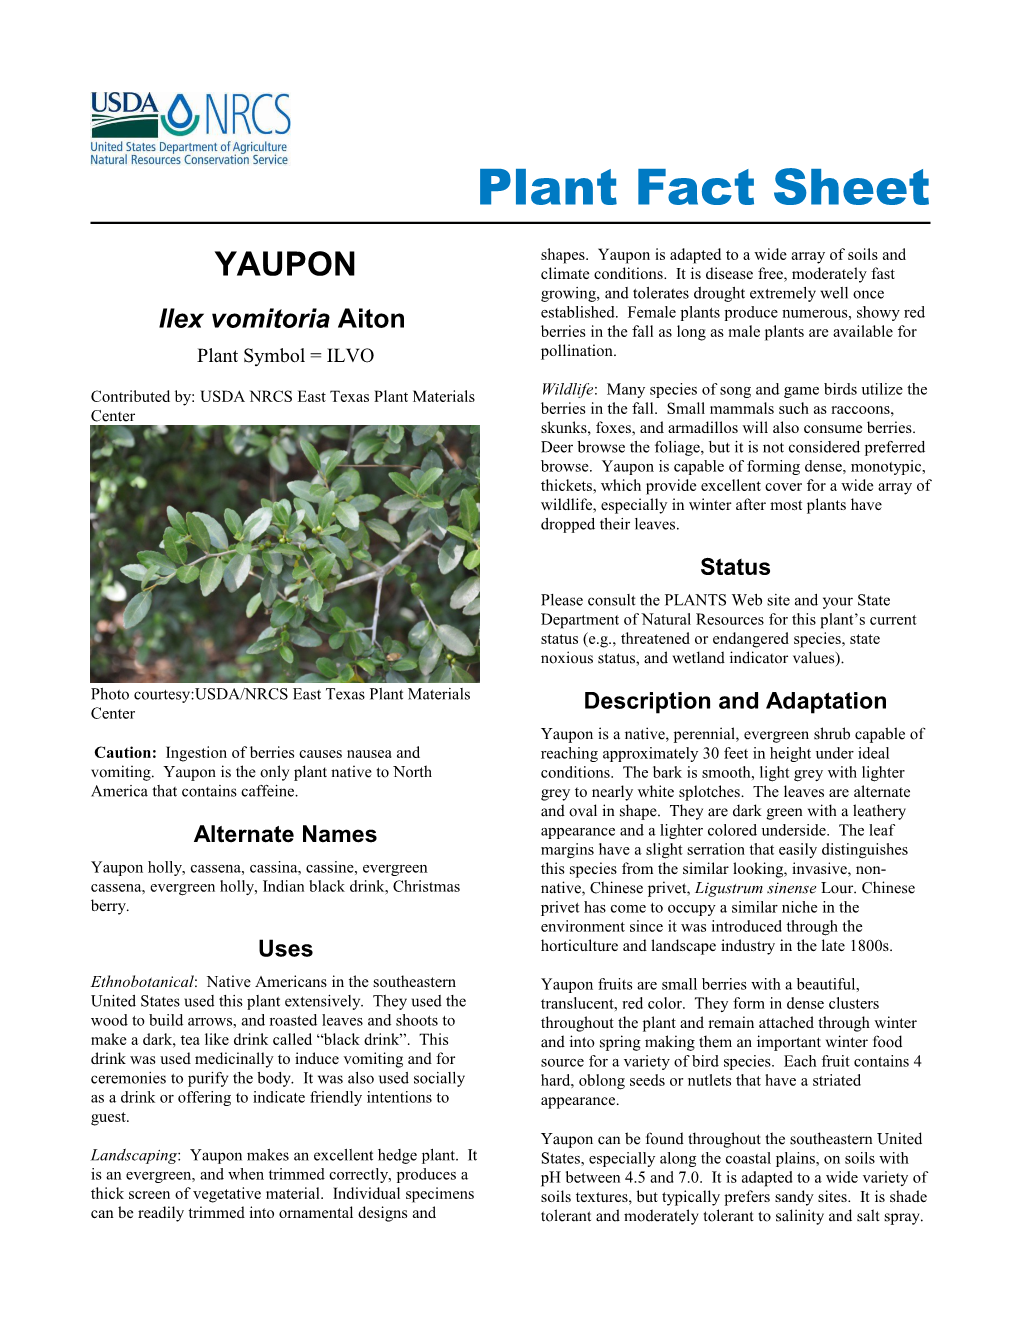 Yaupon, Ilex Vomitoria, Plant Fact Sheet